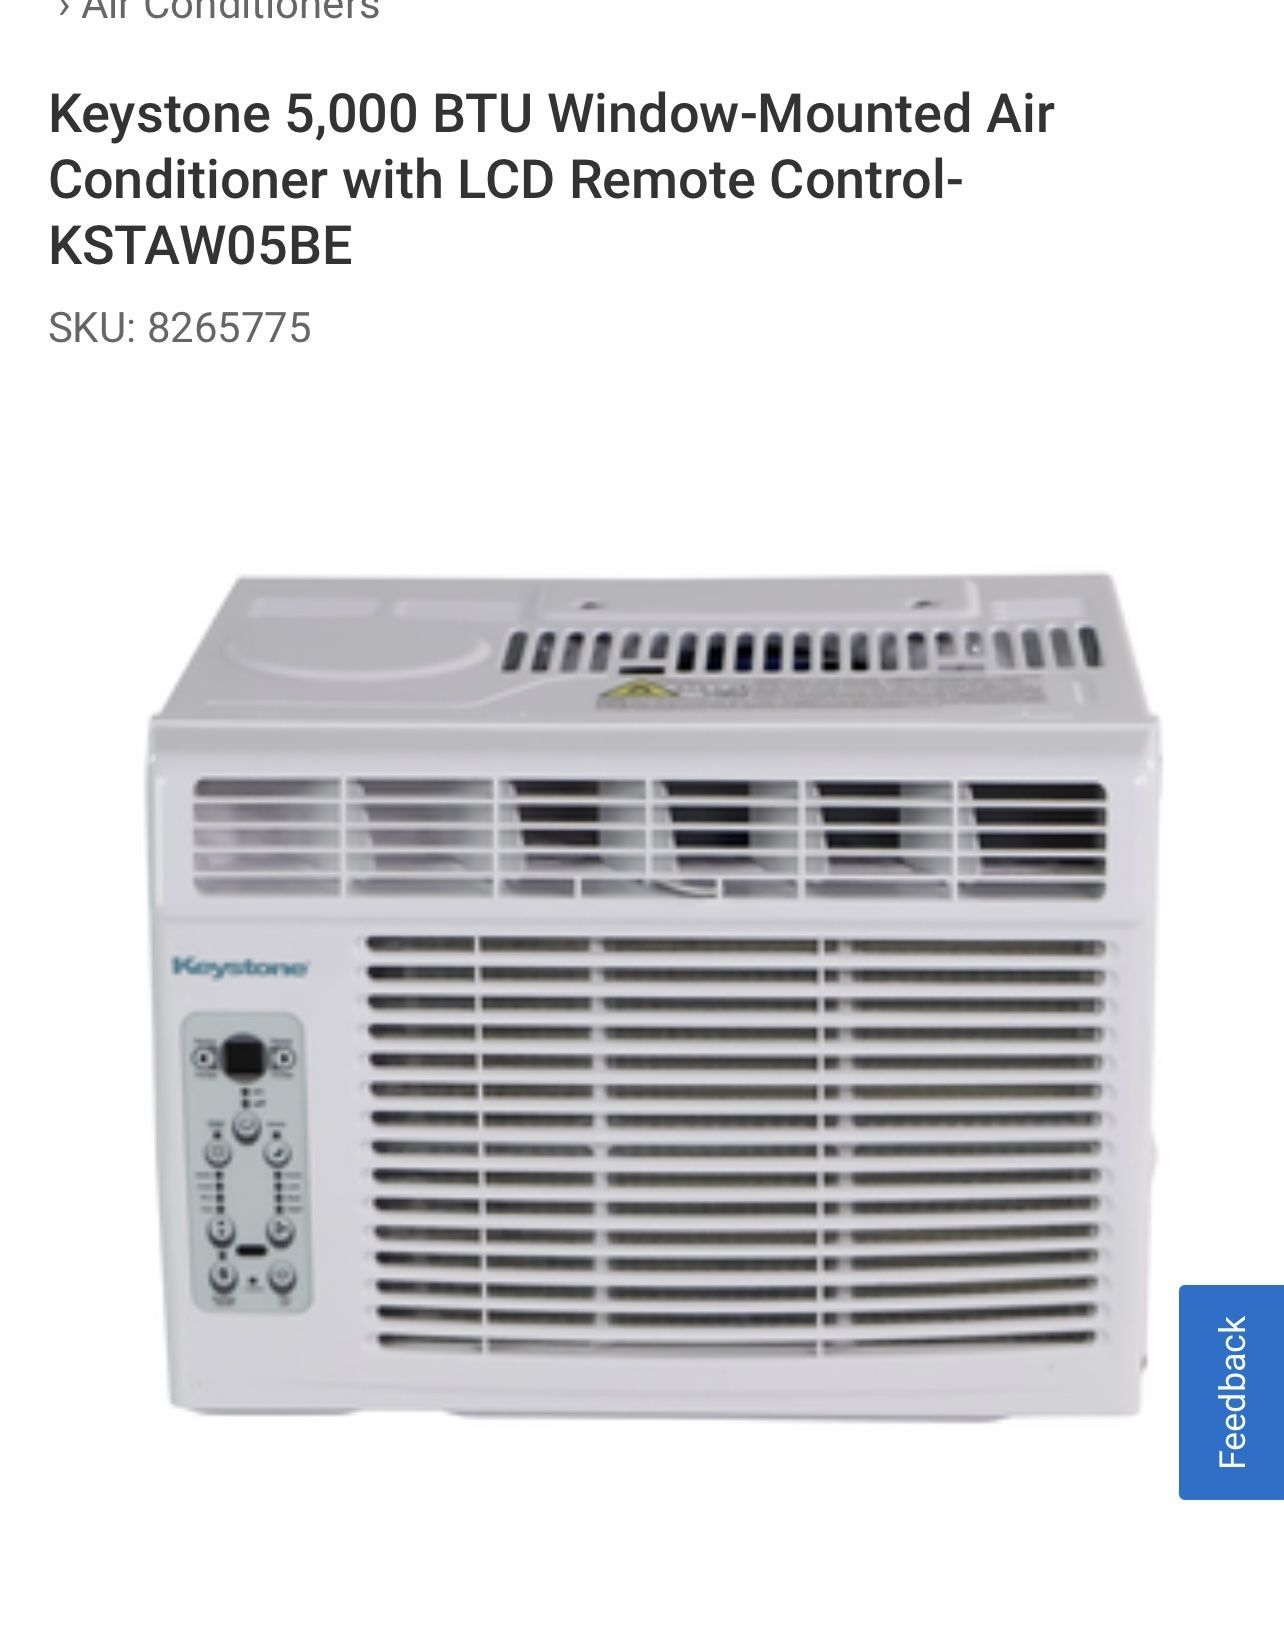 Keystone 5,000 BTU Window-Mounted Air Conditioner with LCD Remote Control-